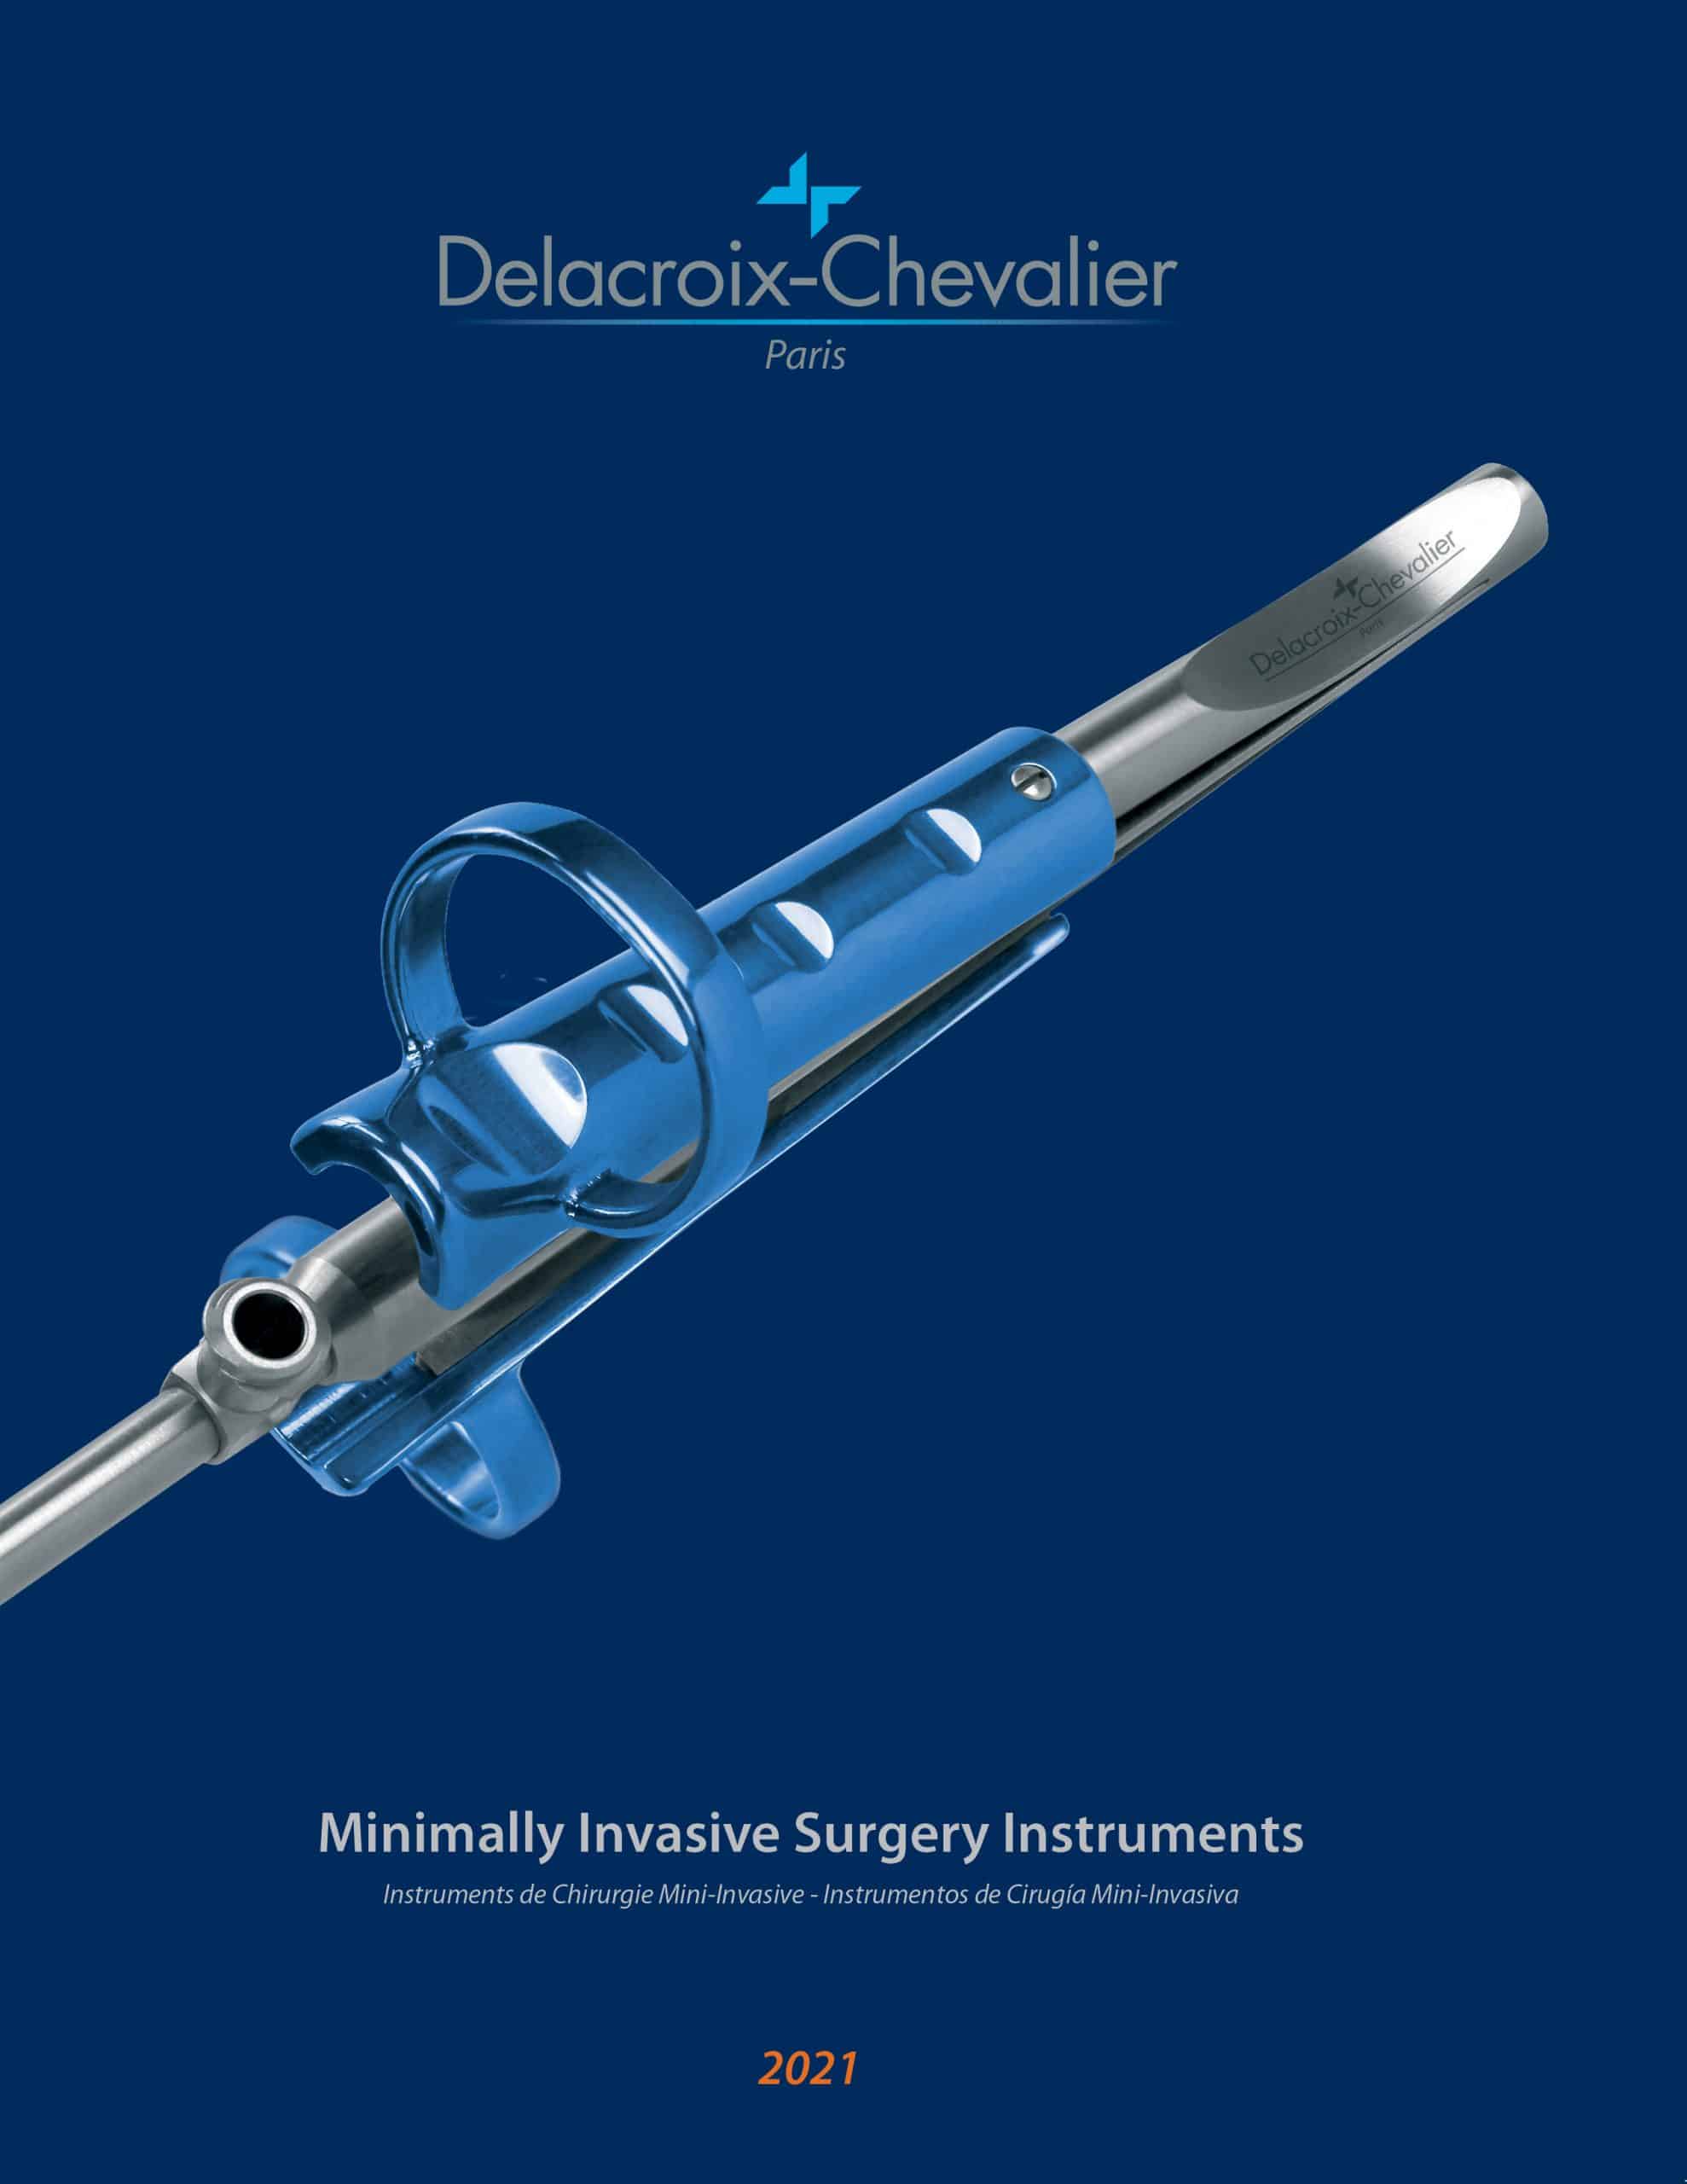 Delacroix-Chevalier Minimally Invasive Surgery Instruments Catalog